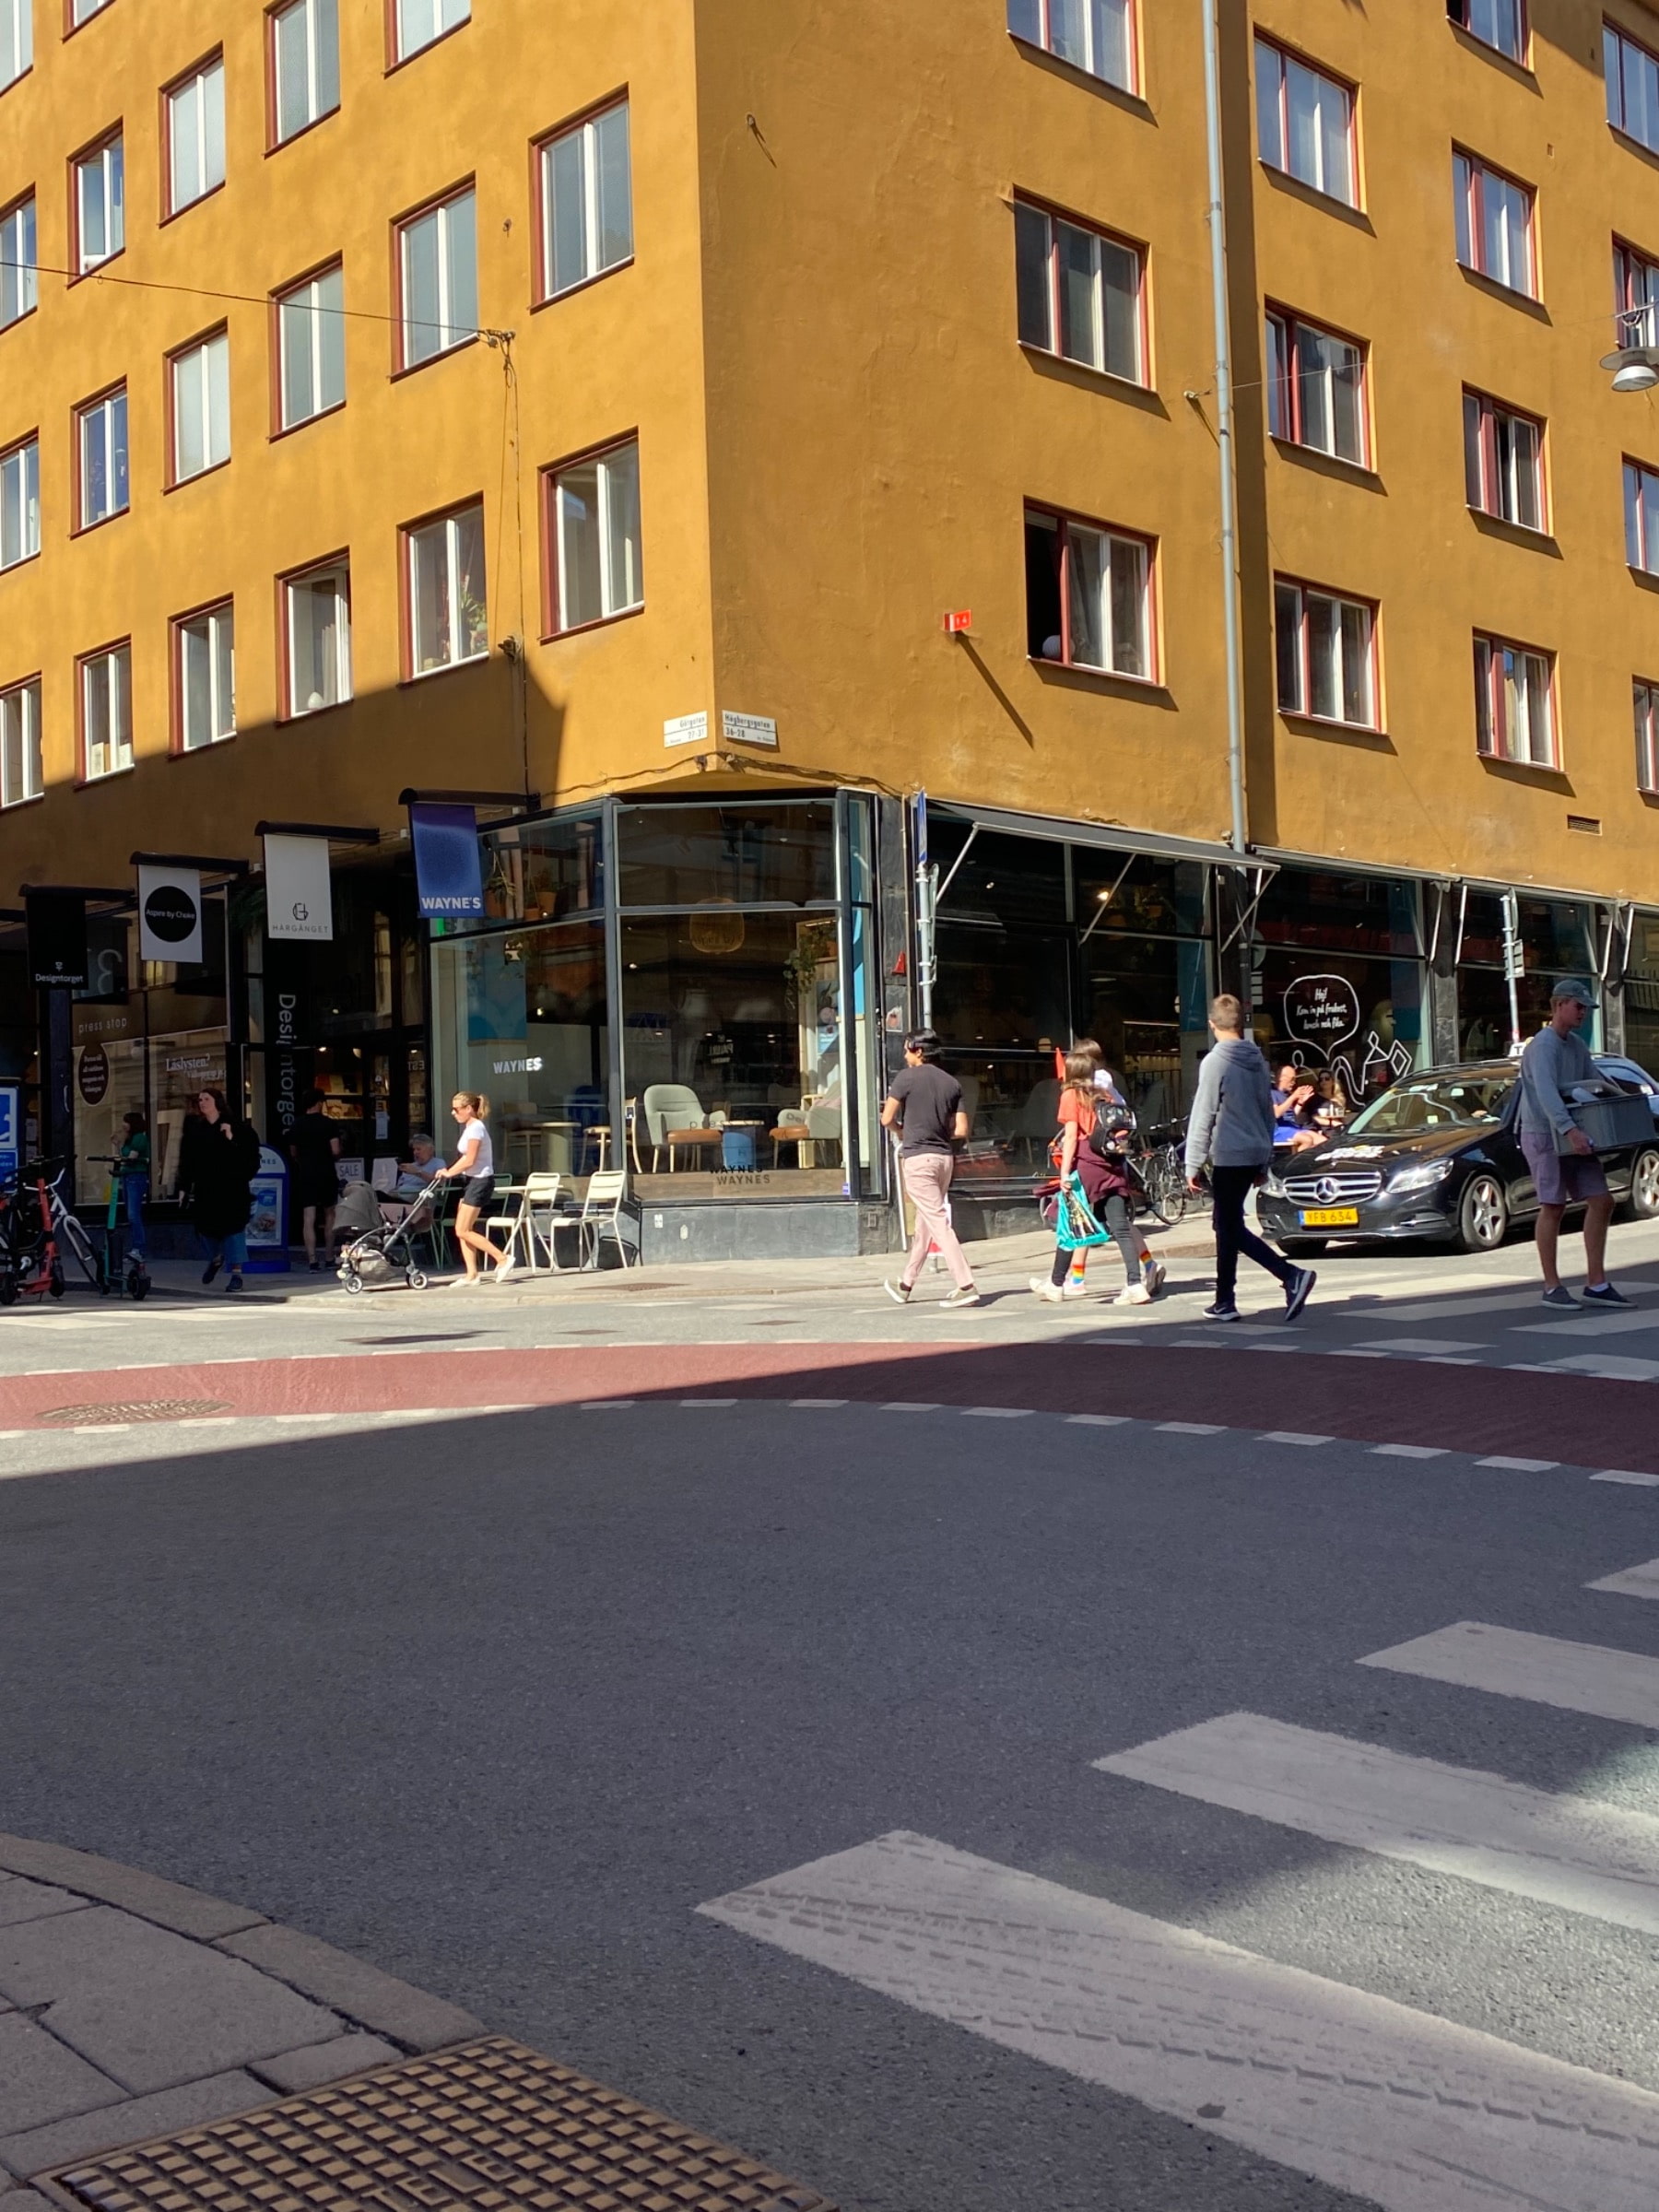 Photo from Wayne's Coffee Götgatan by Peter B. (16/06/2021)